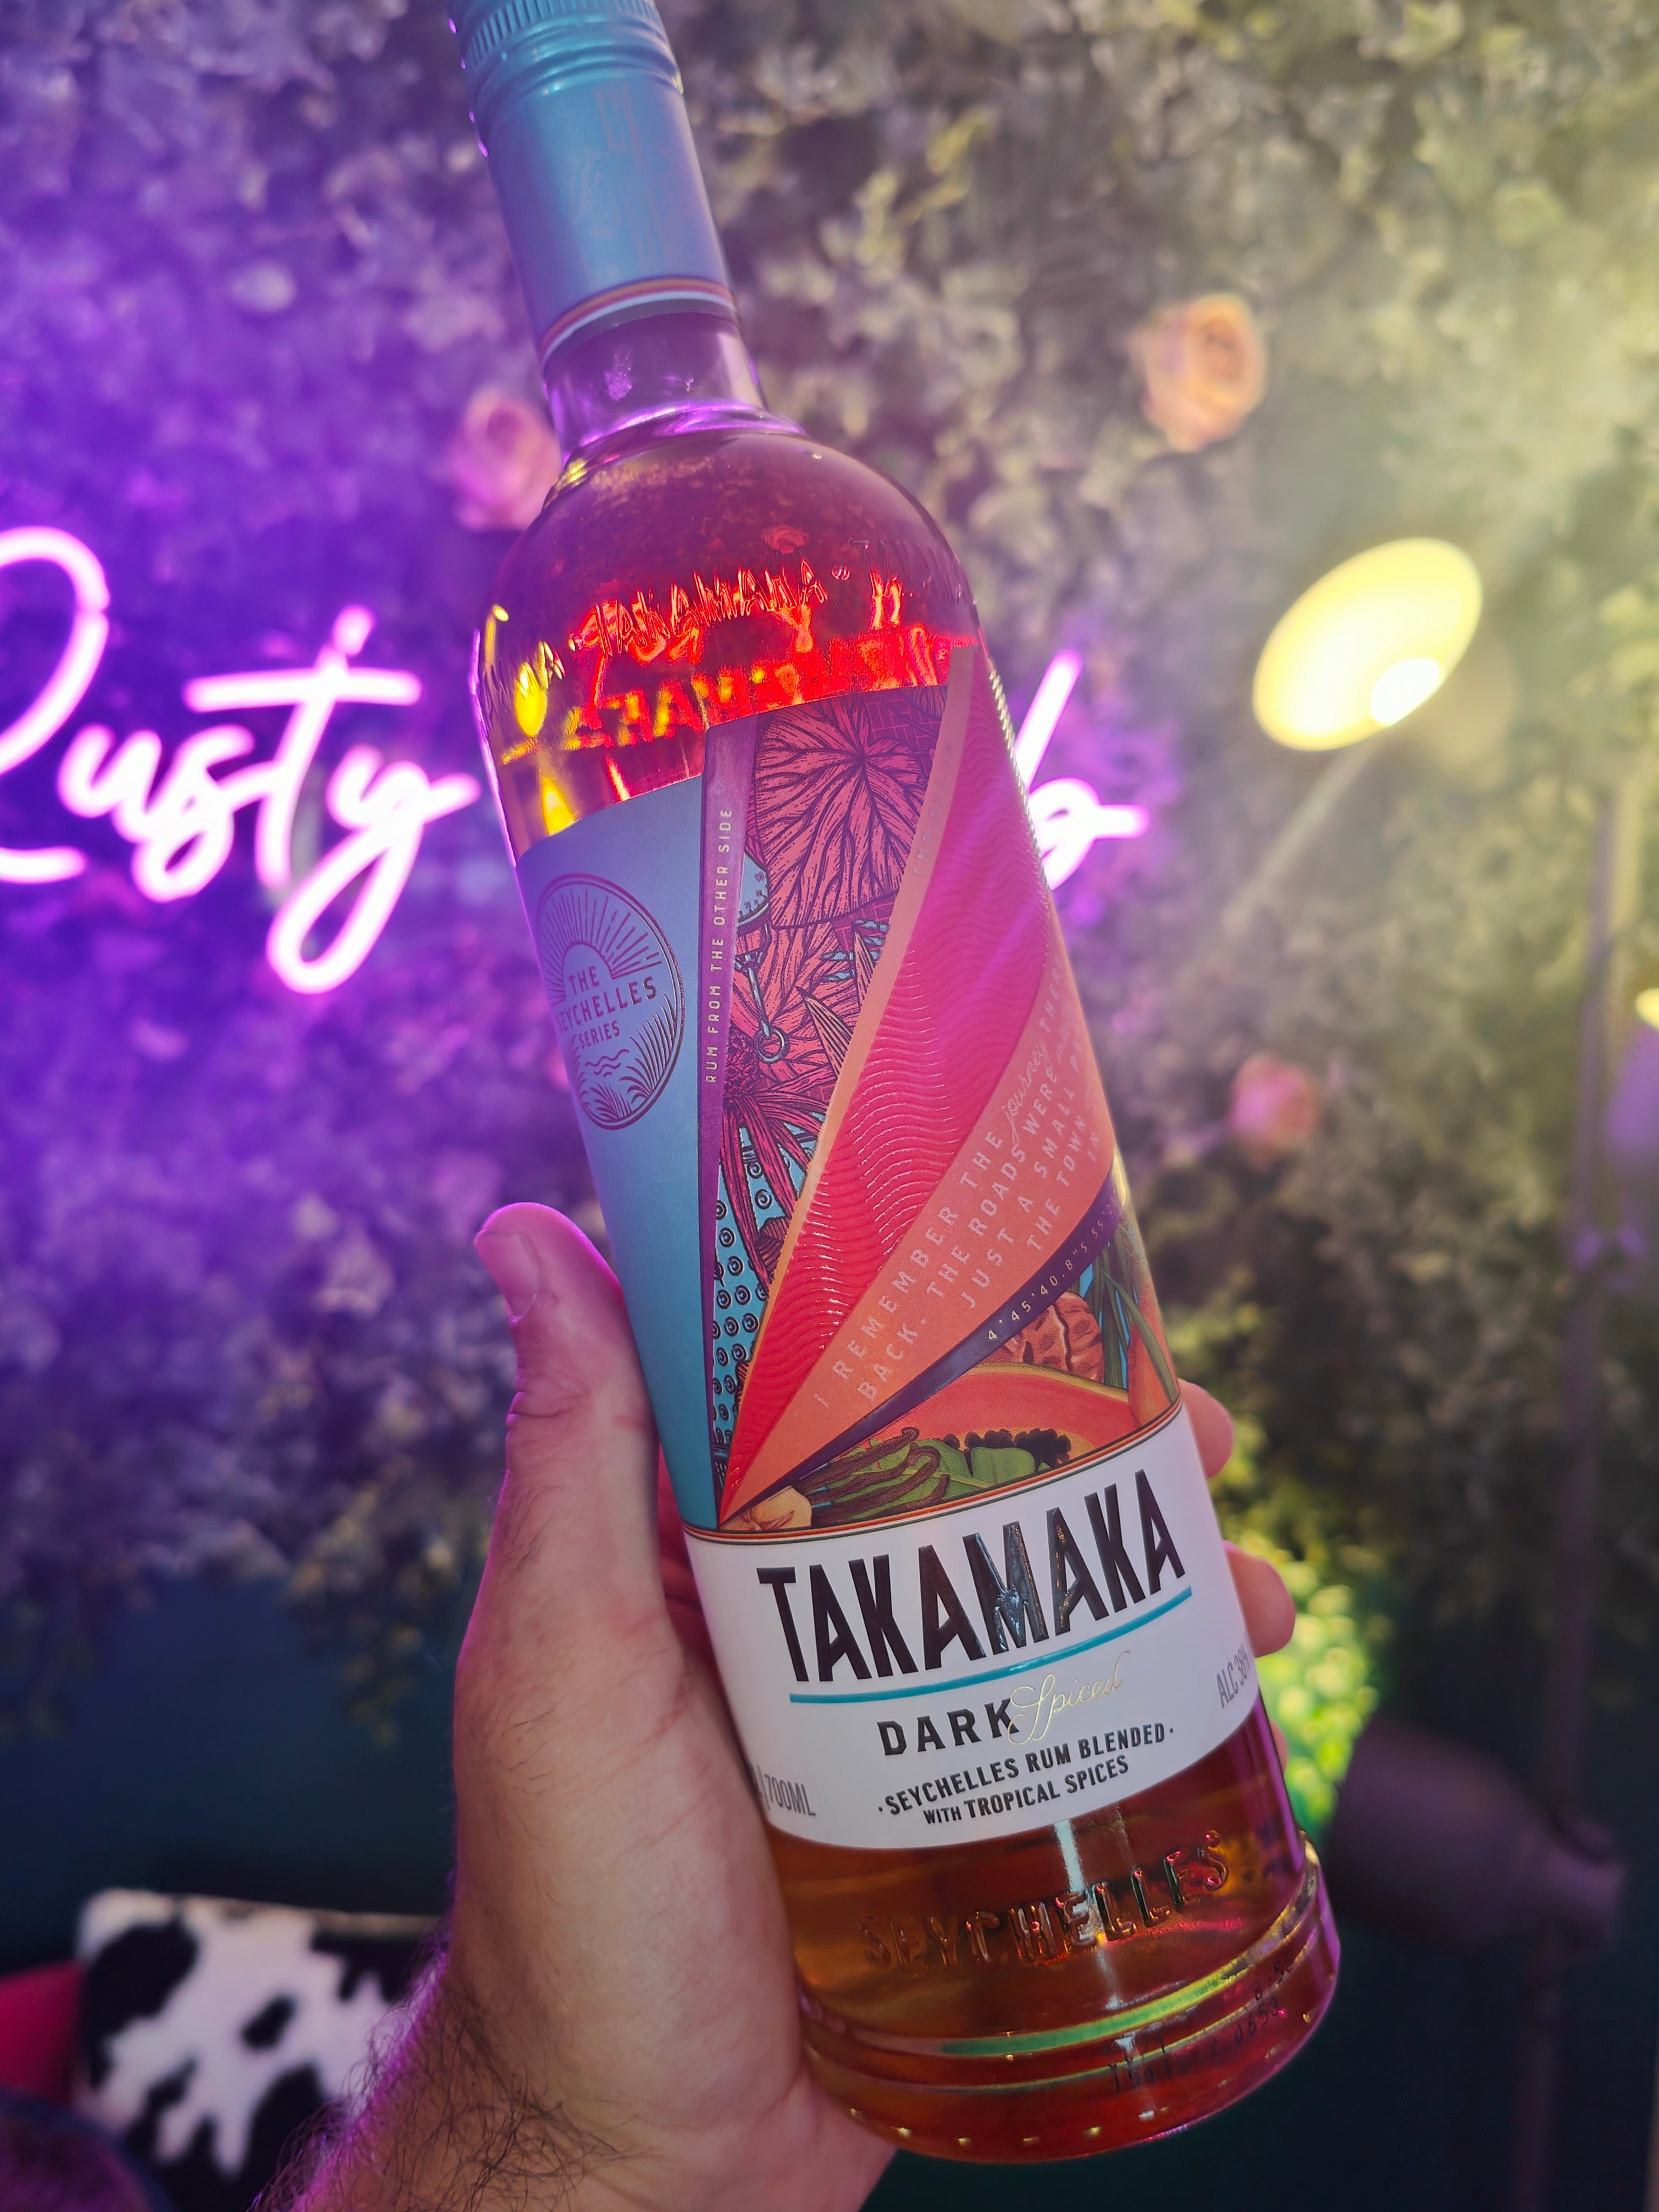 Takamaka Dark spiced Rum 38% – The Rusty Krab